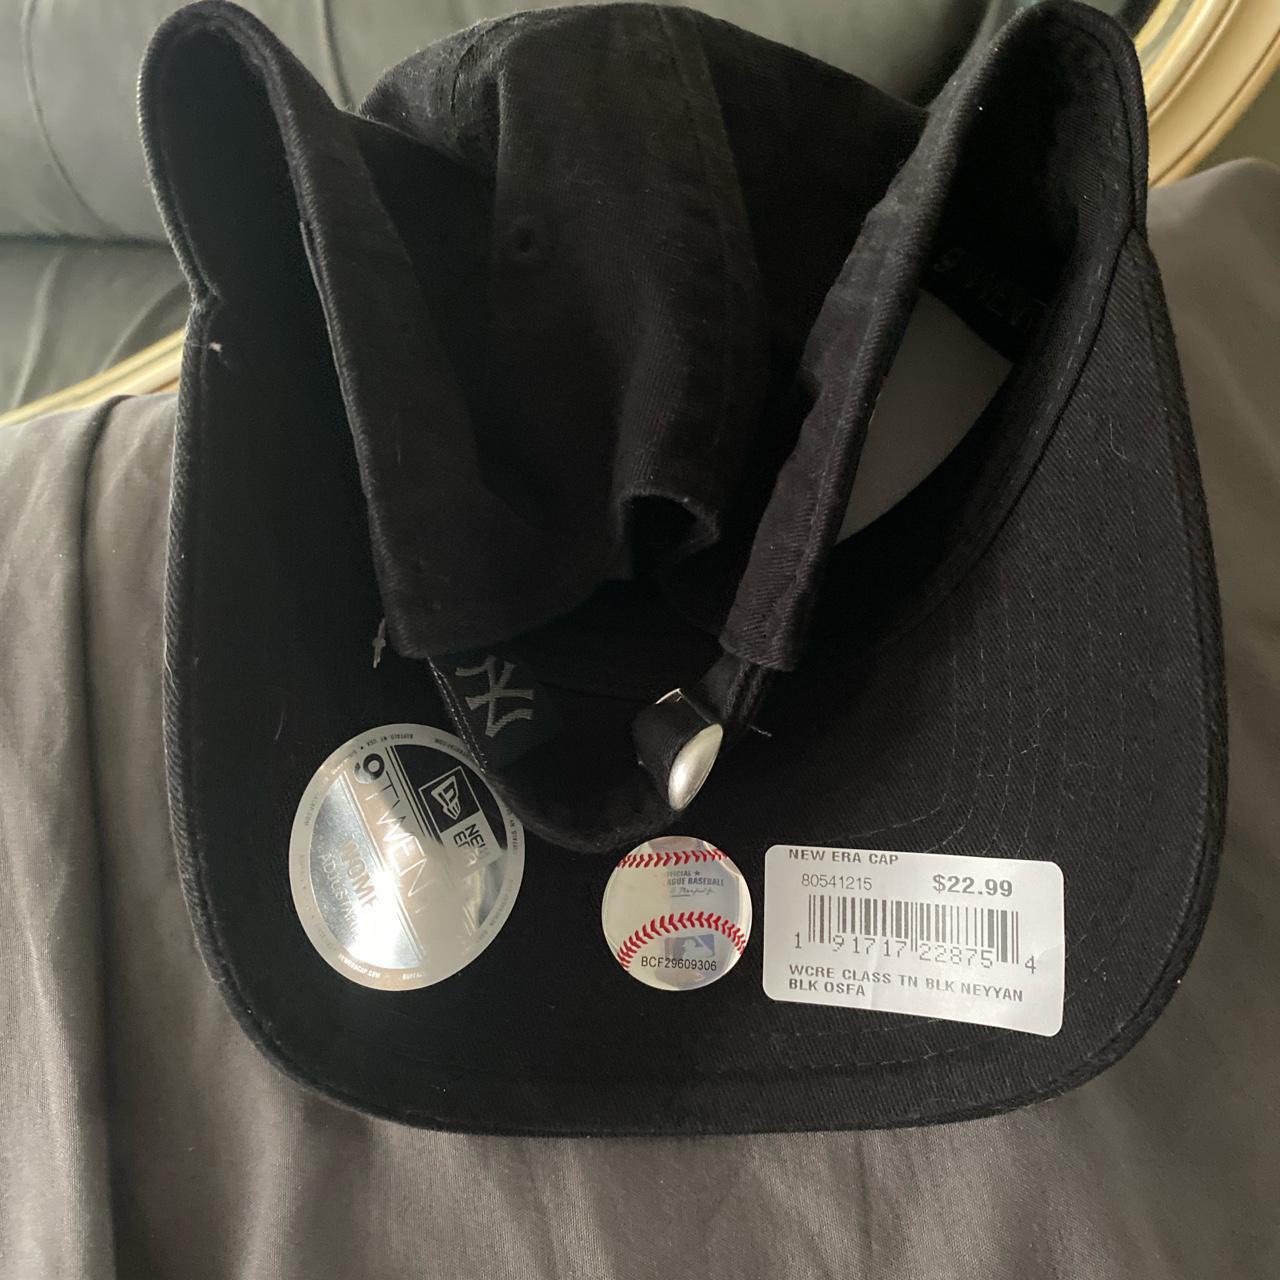 Product Image 2 - Yankees baseball cap